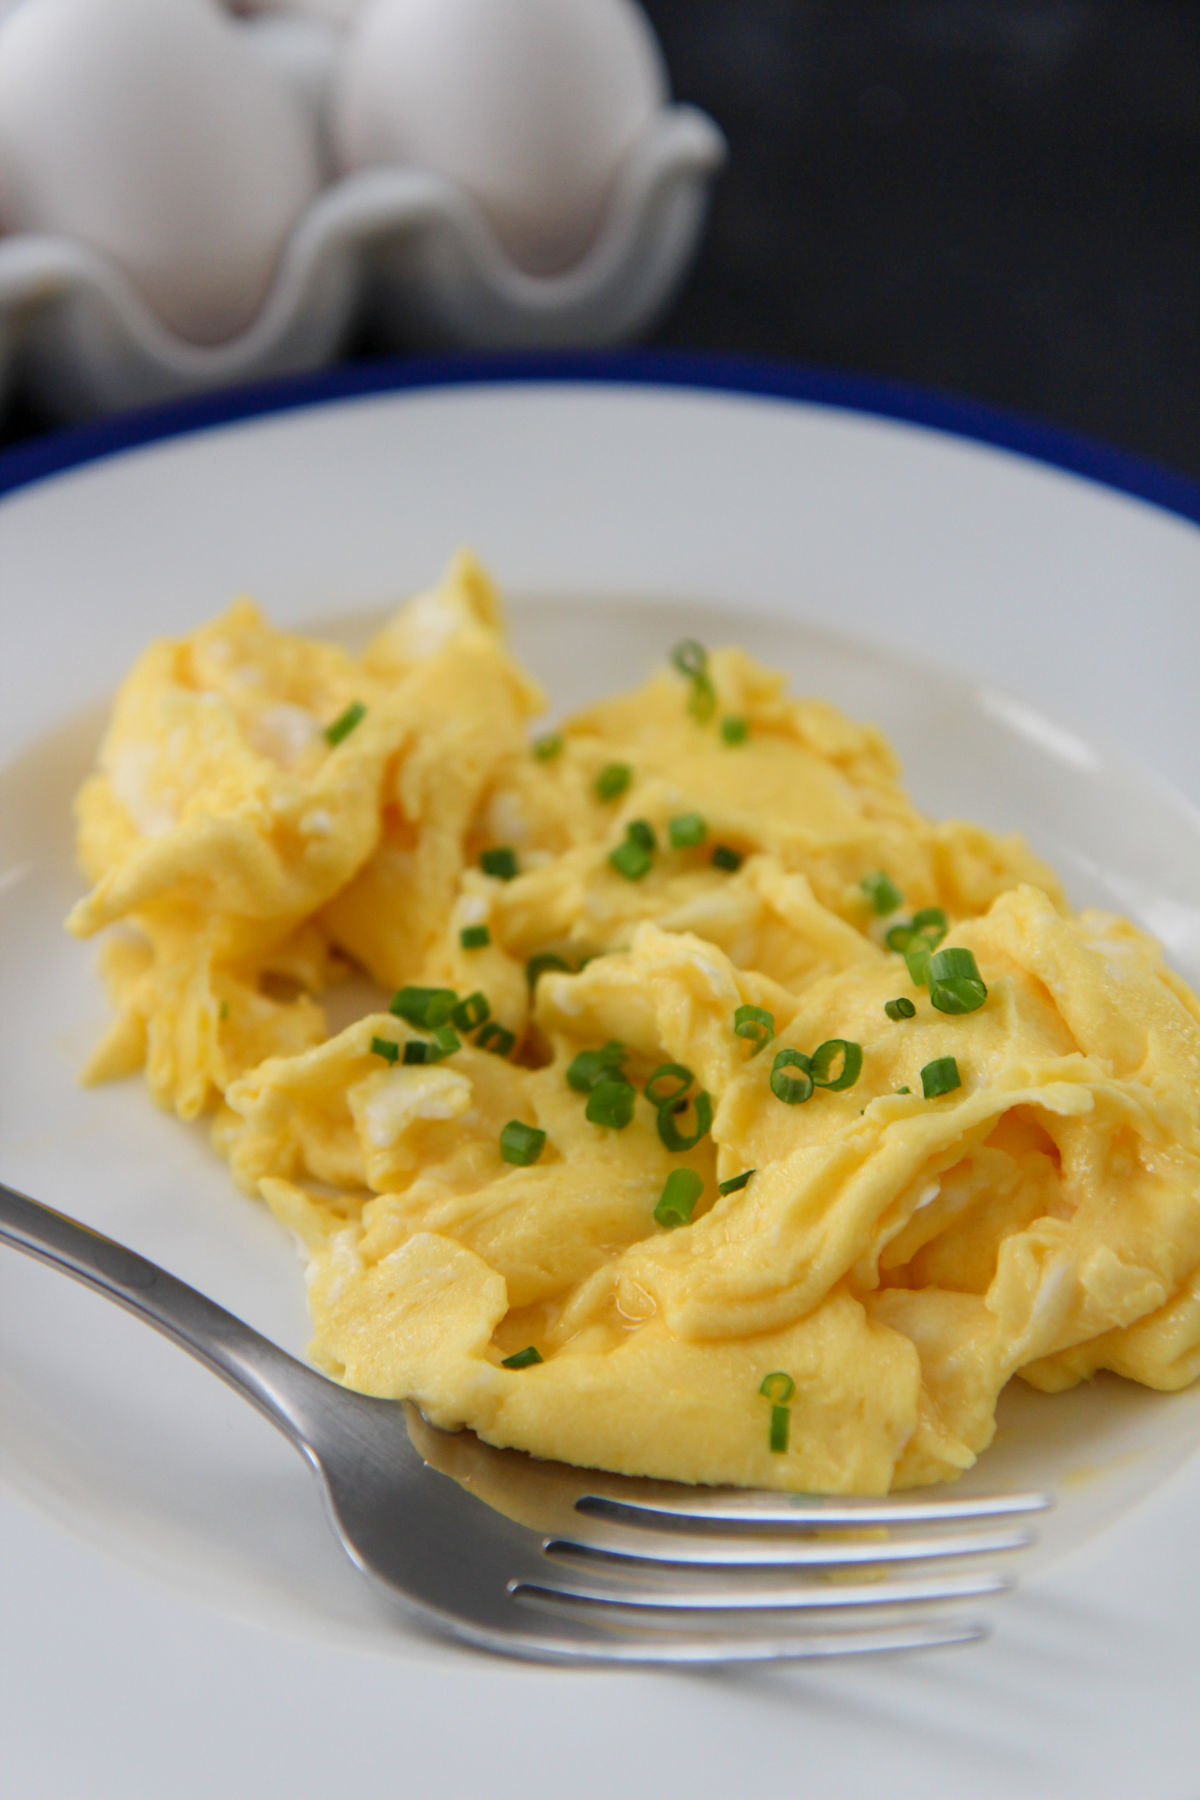 https://www.cookedbyjulie.com/wp-content/uploads/2019/05/soft-scrambled-eggs-one.jpg